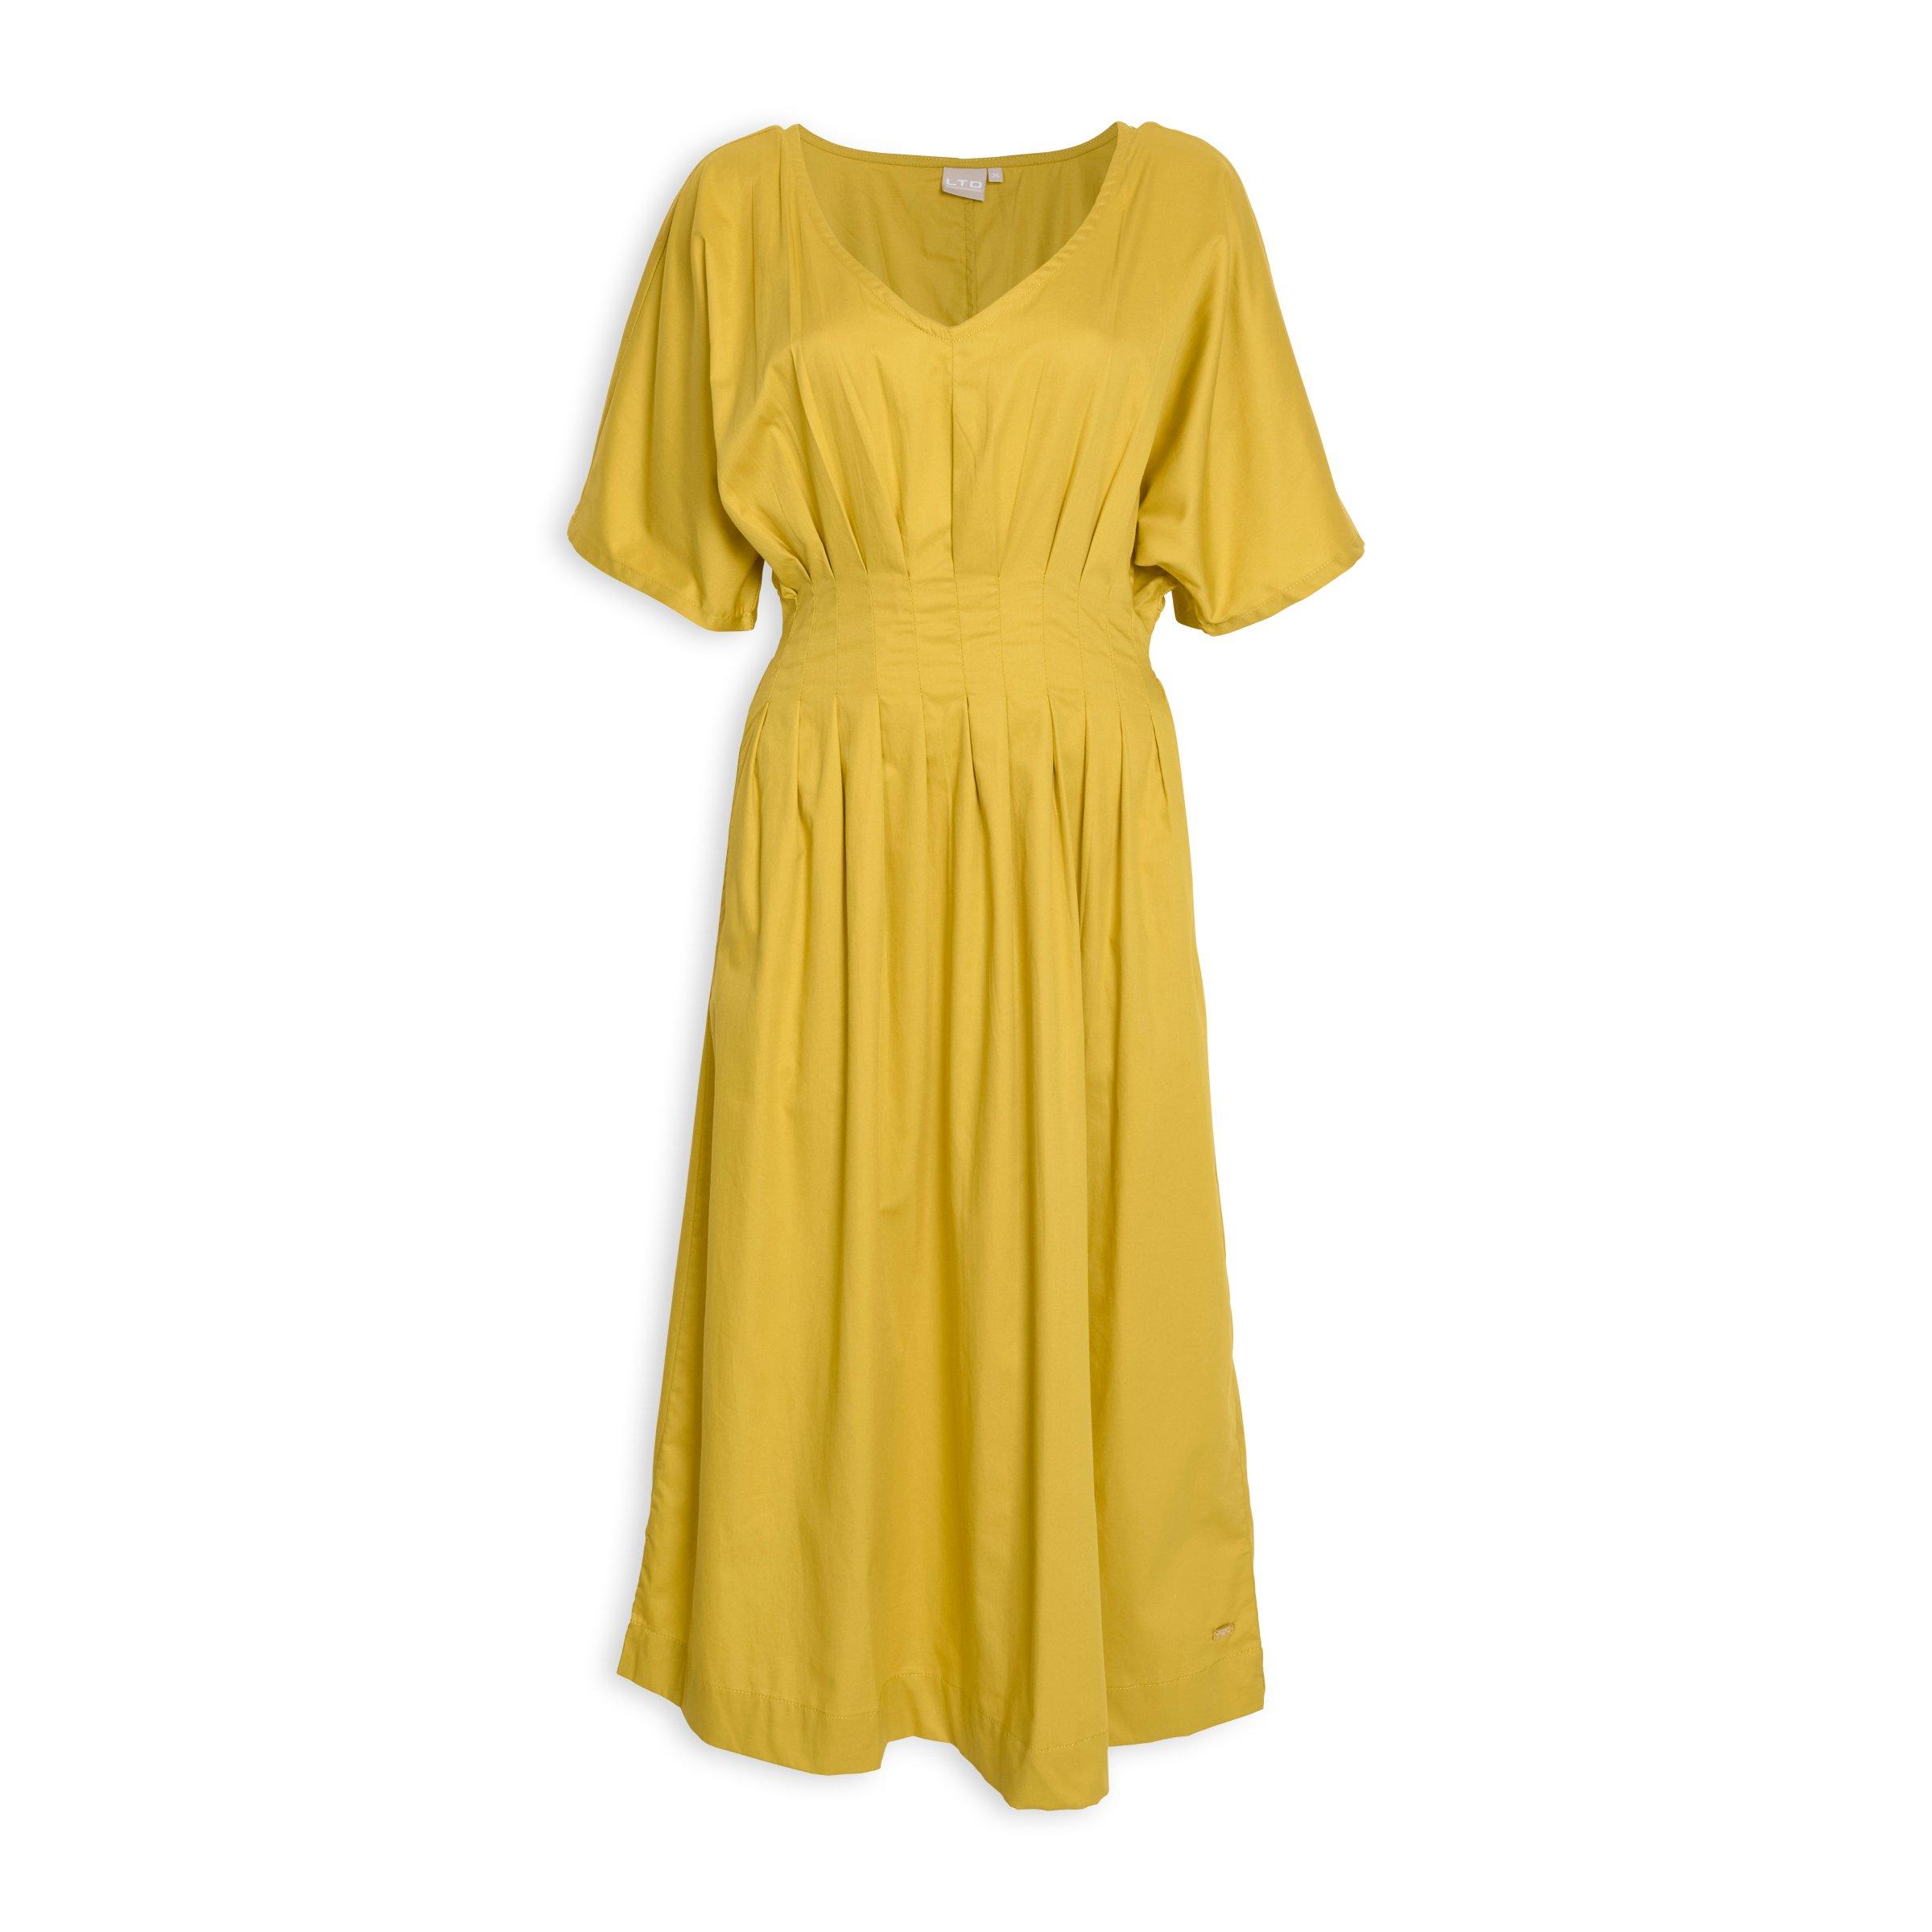 Buy LTD Woman Yellow Flare Dress Online | Truworths